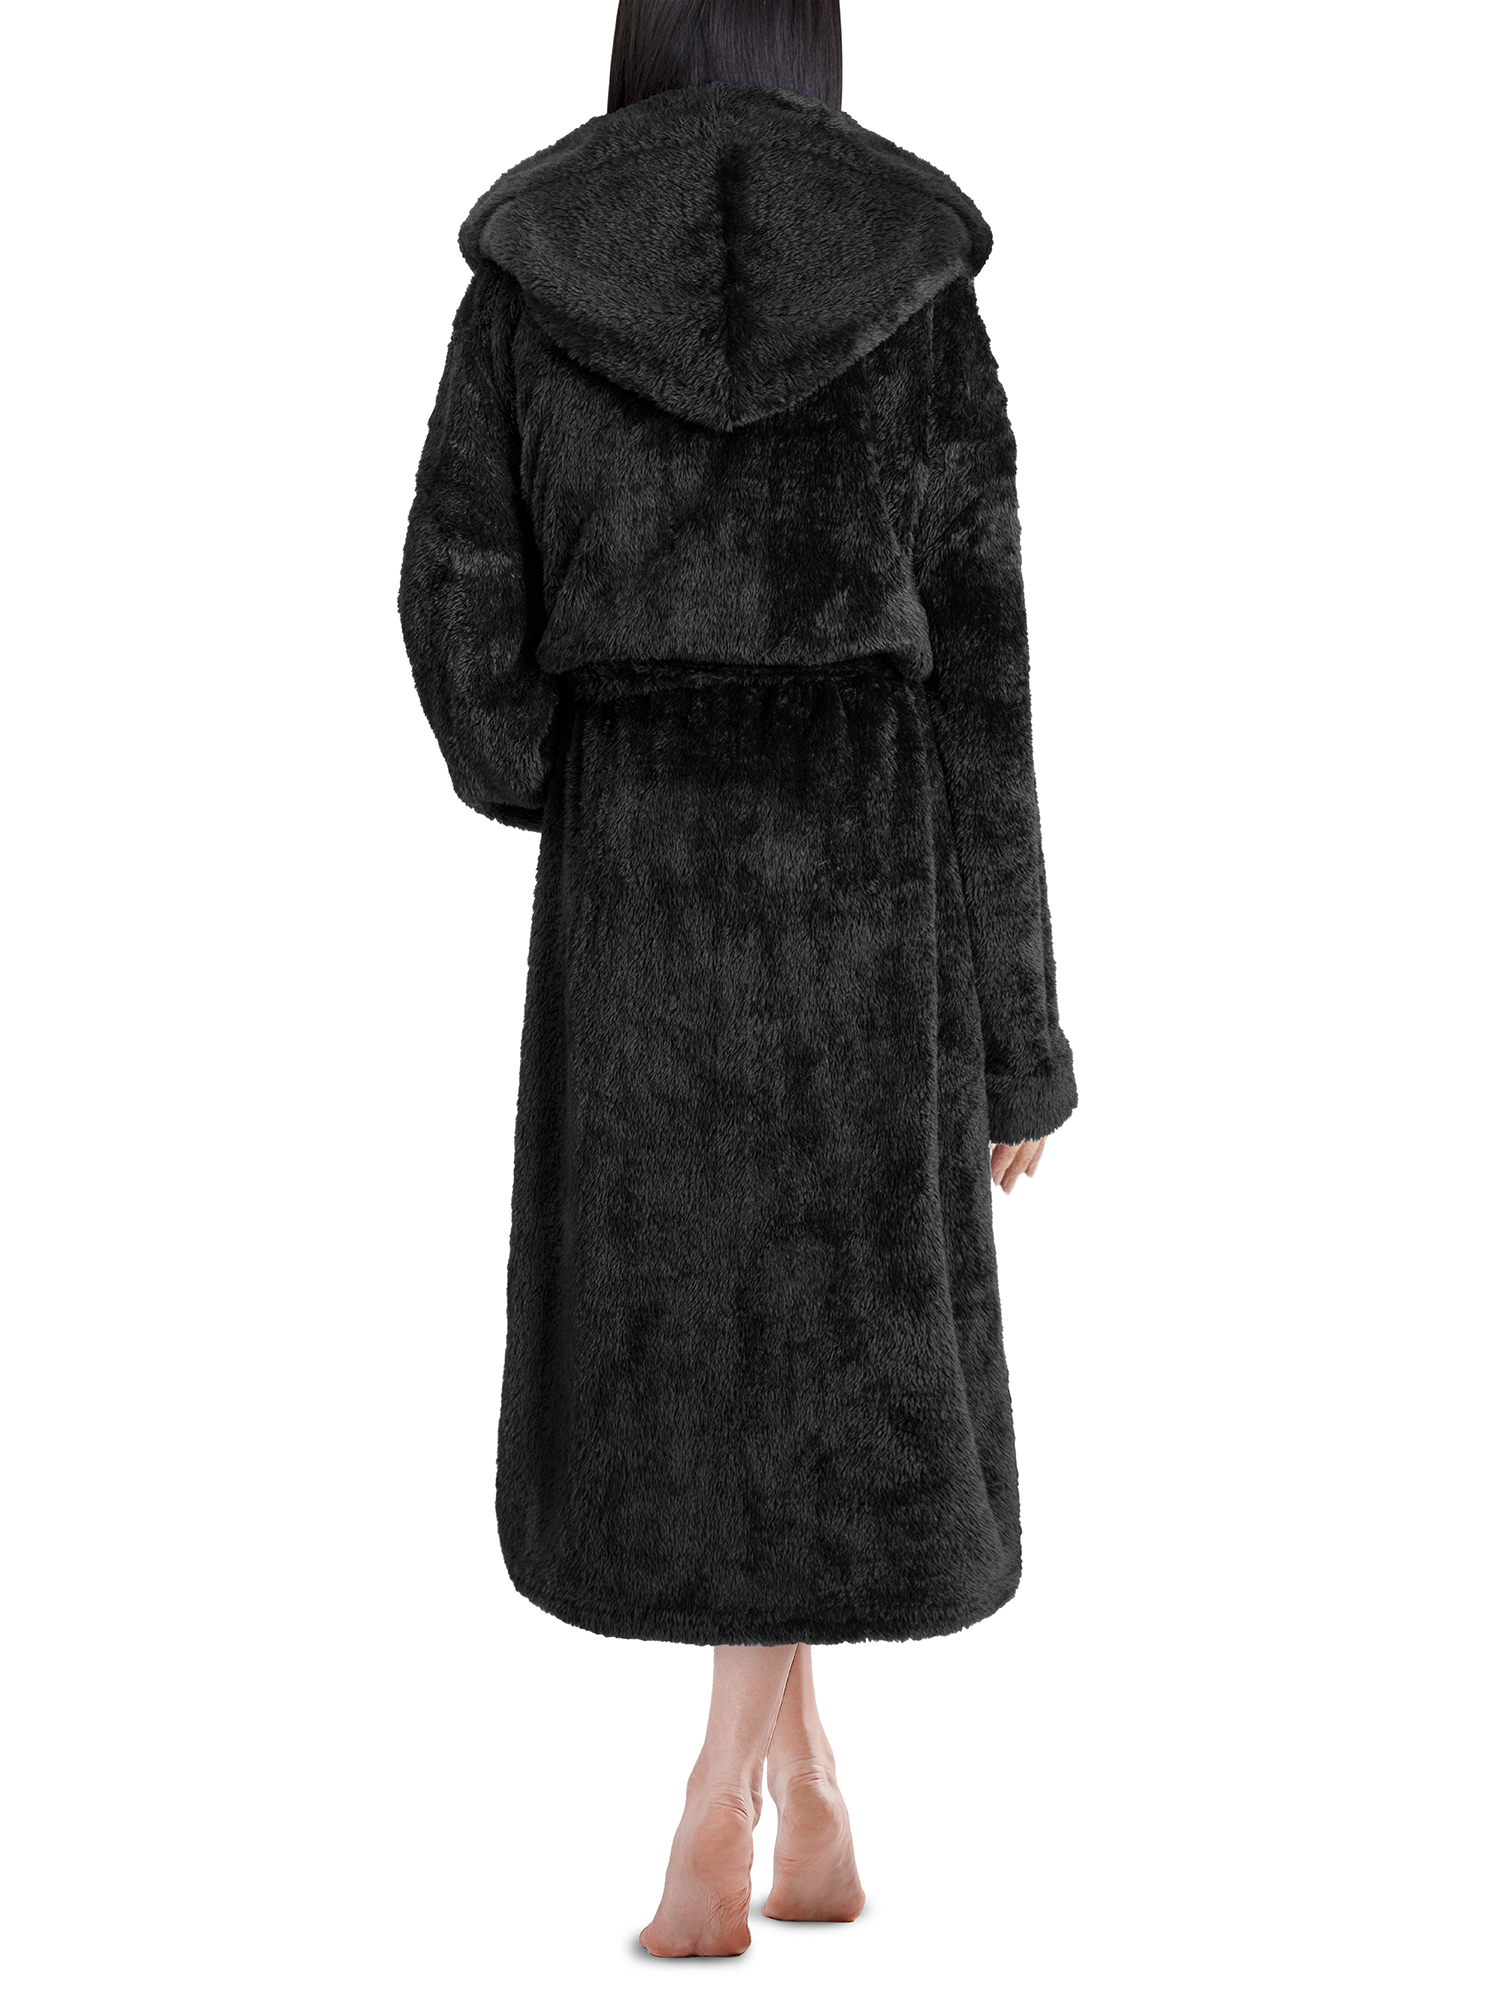 Ladies Warm Winter Soft Borg Fleece Hooded Dressing Gown Plain Black Grey &  Pink | eBay